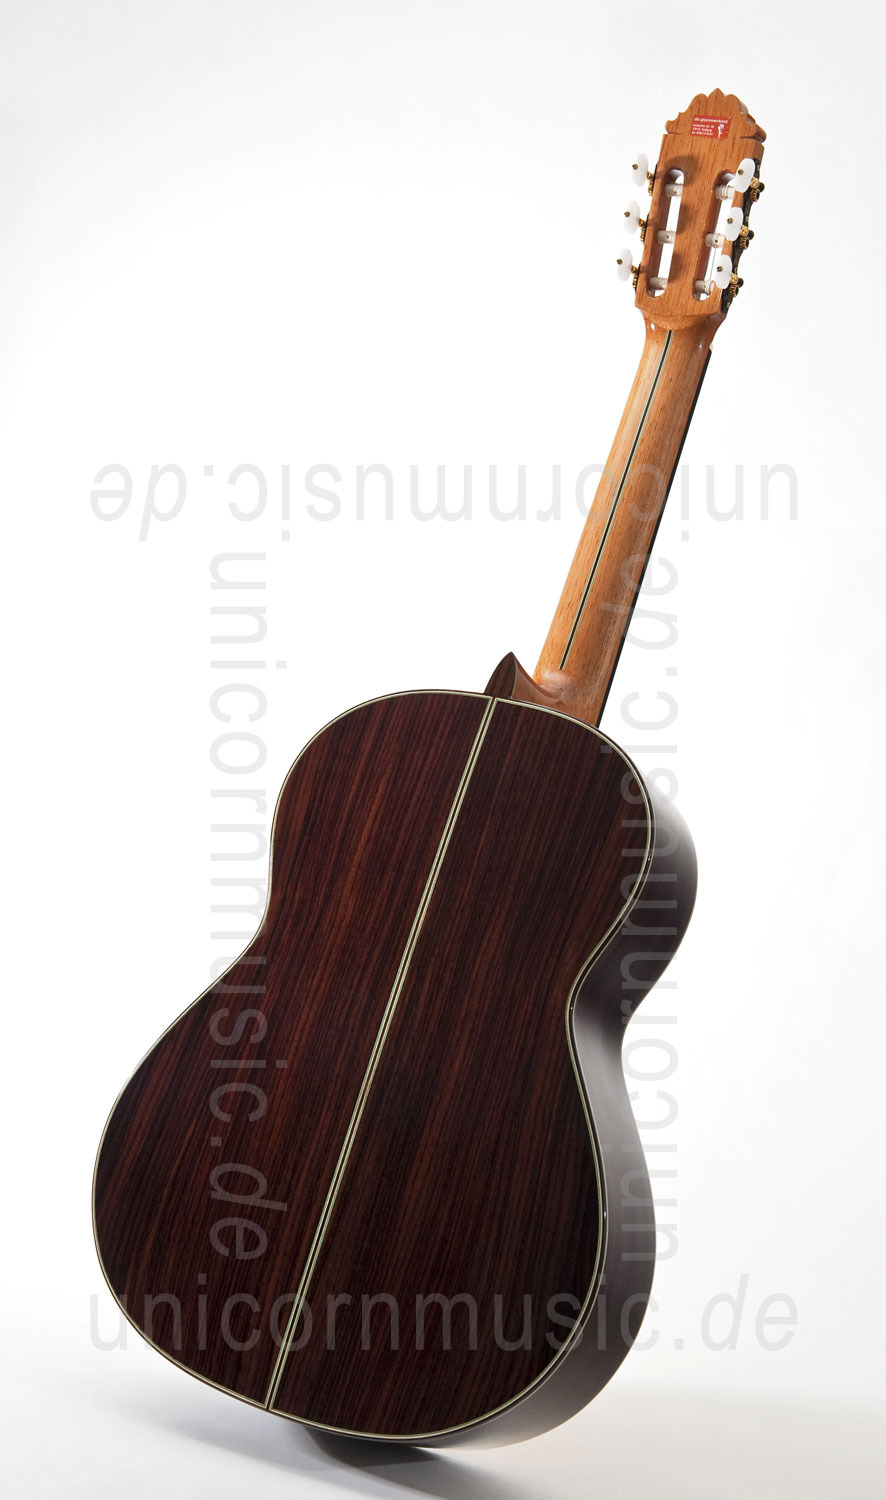 to article description / price Spanish Classical Guitar RICARDO SANCHIS CARPIO Model CONCIERTO CAVIUNA - all solid - spruce top + case